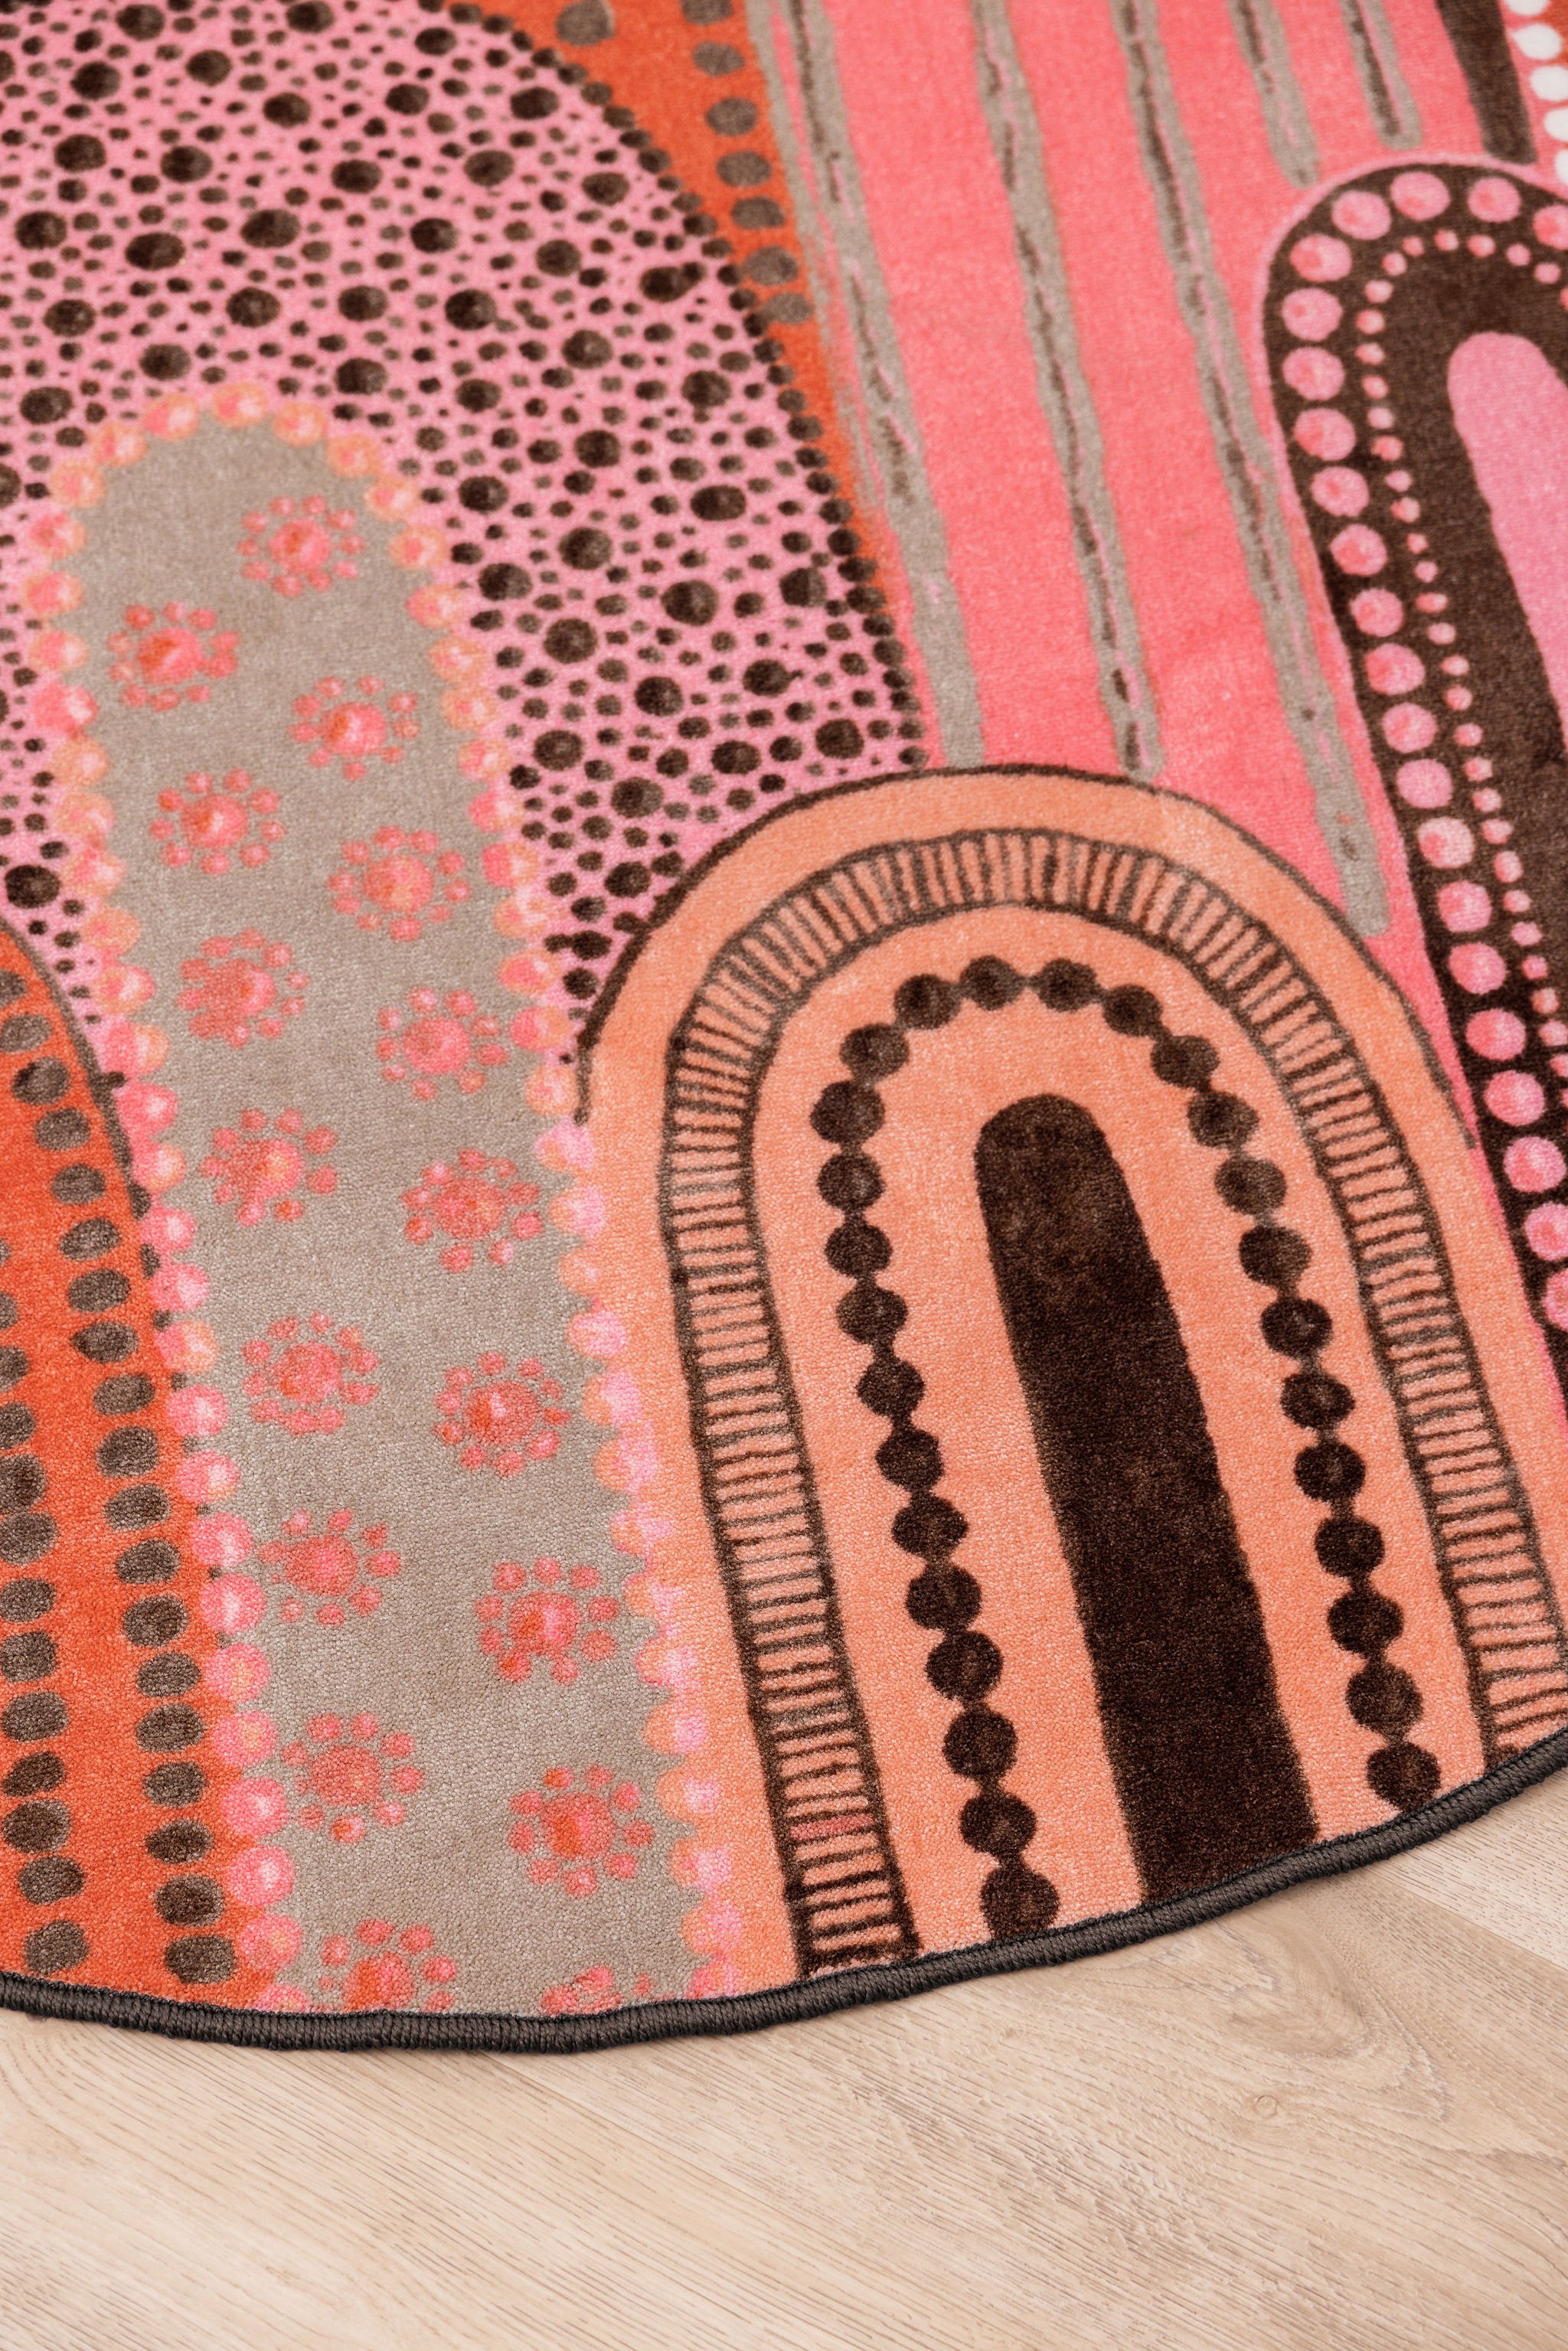 Tanika-Blair-Photography-Emro-Designs-Daycare-Aboriginal-Floor-Rugs-26.jpg